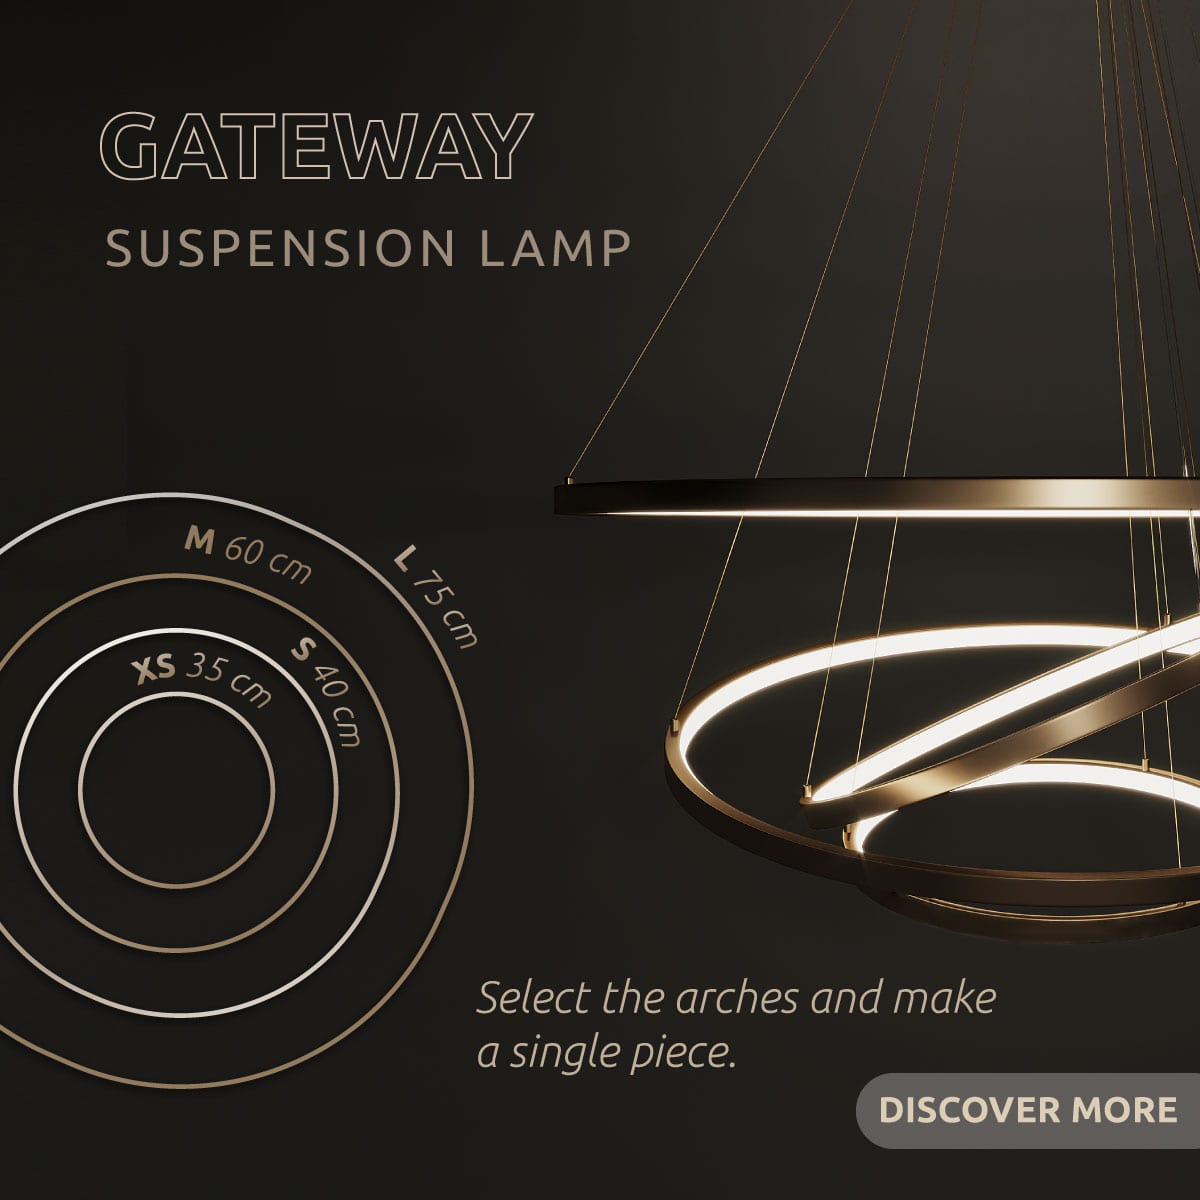 Gateway Suspension Lamp